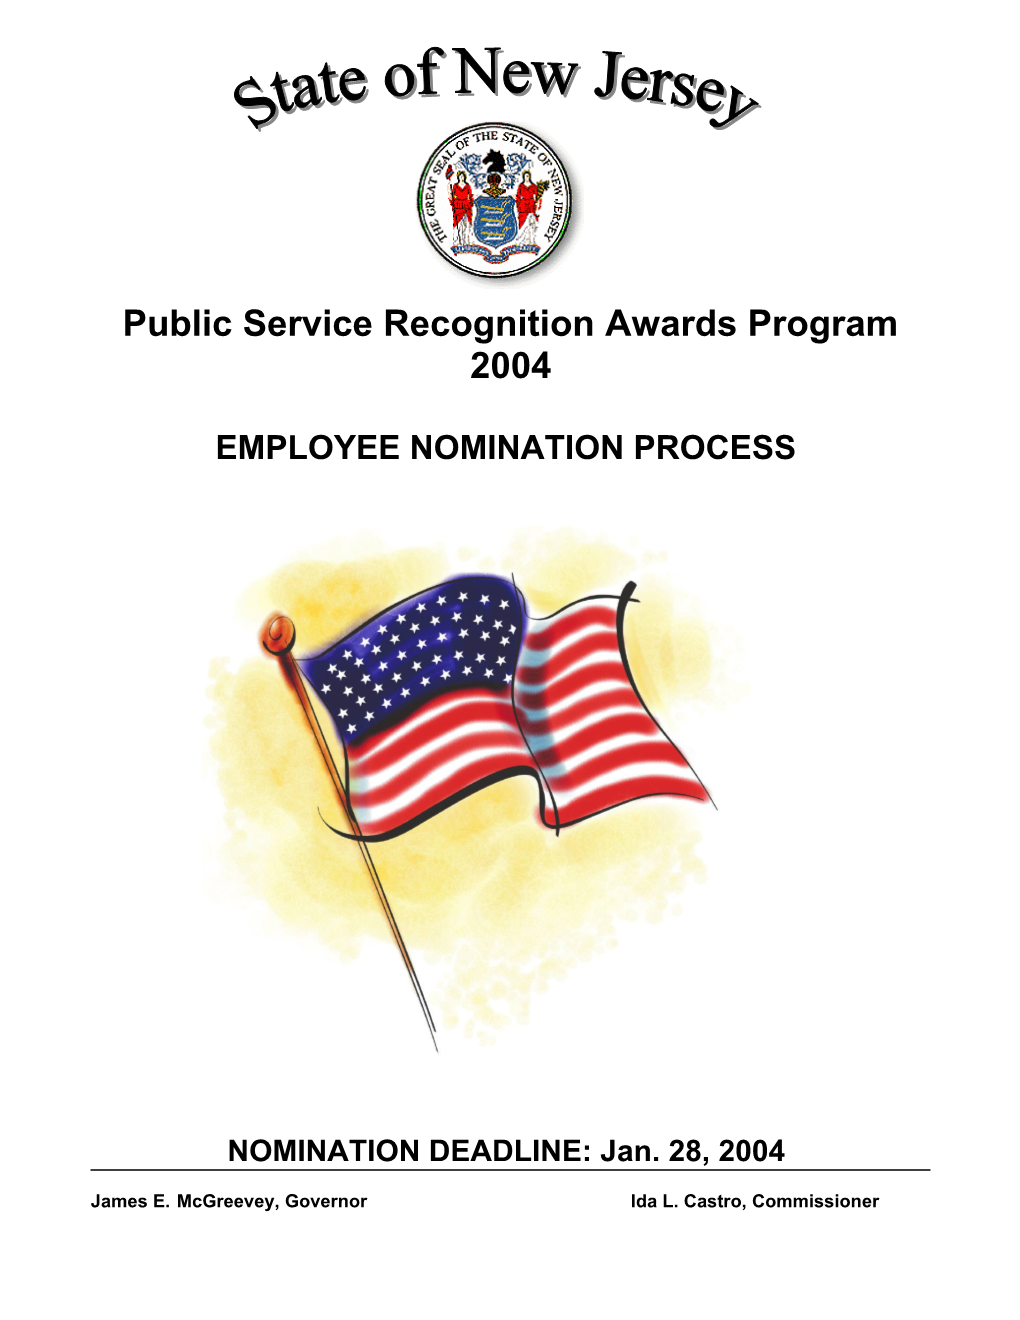 Public Service Recognition Awards Program 2004